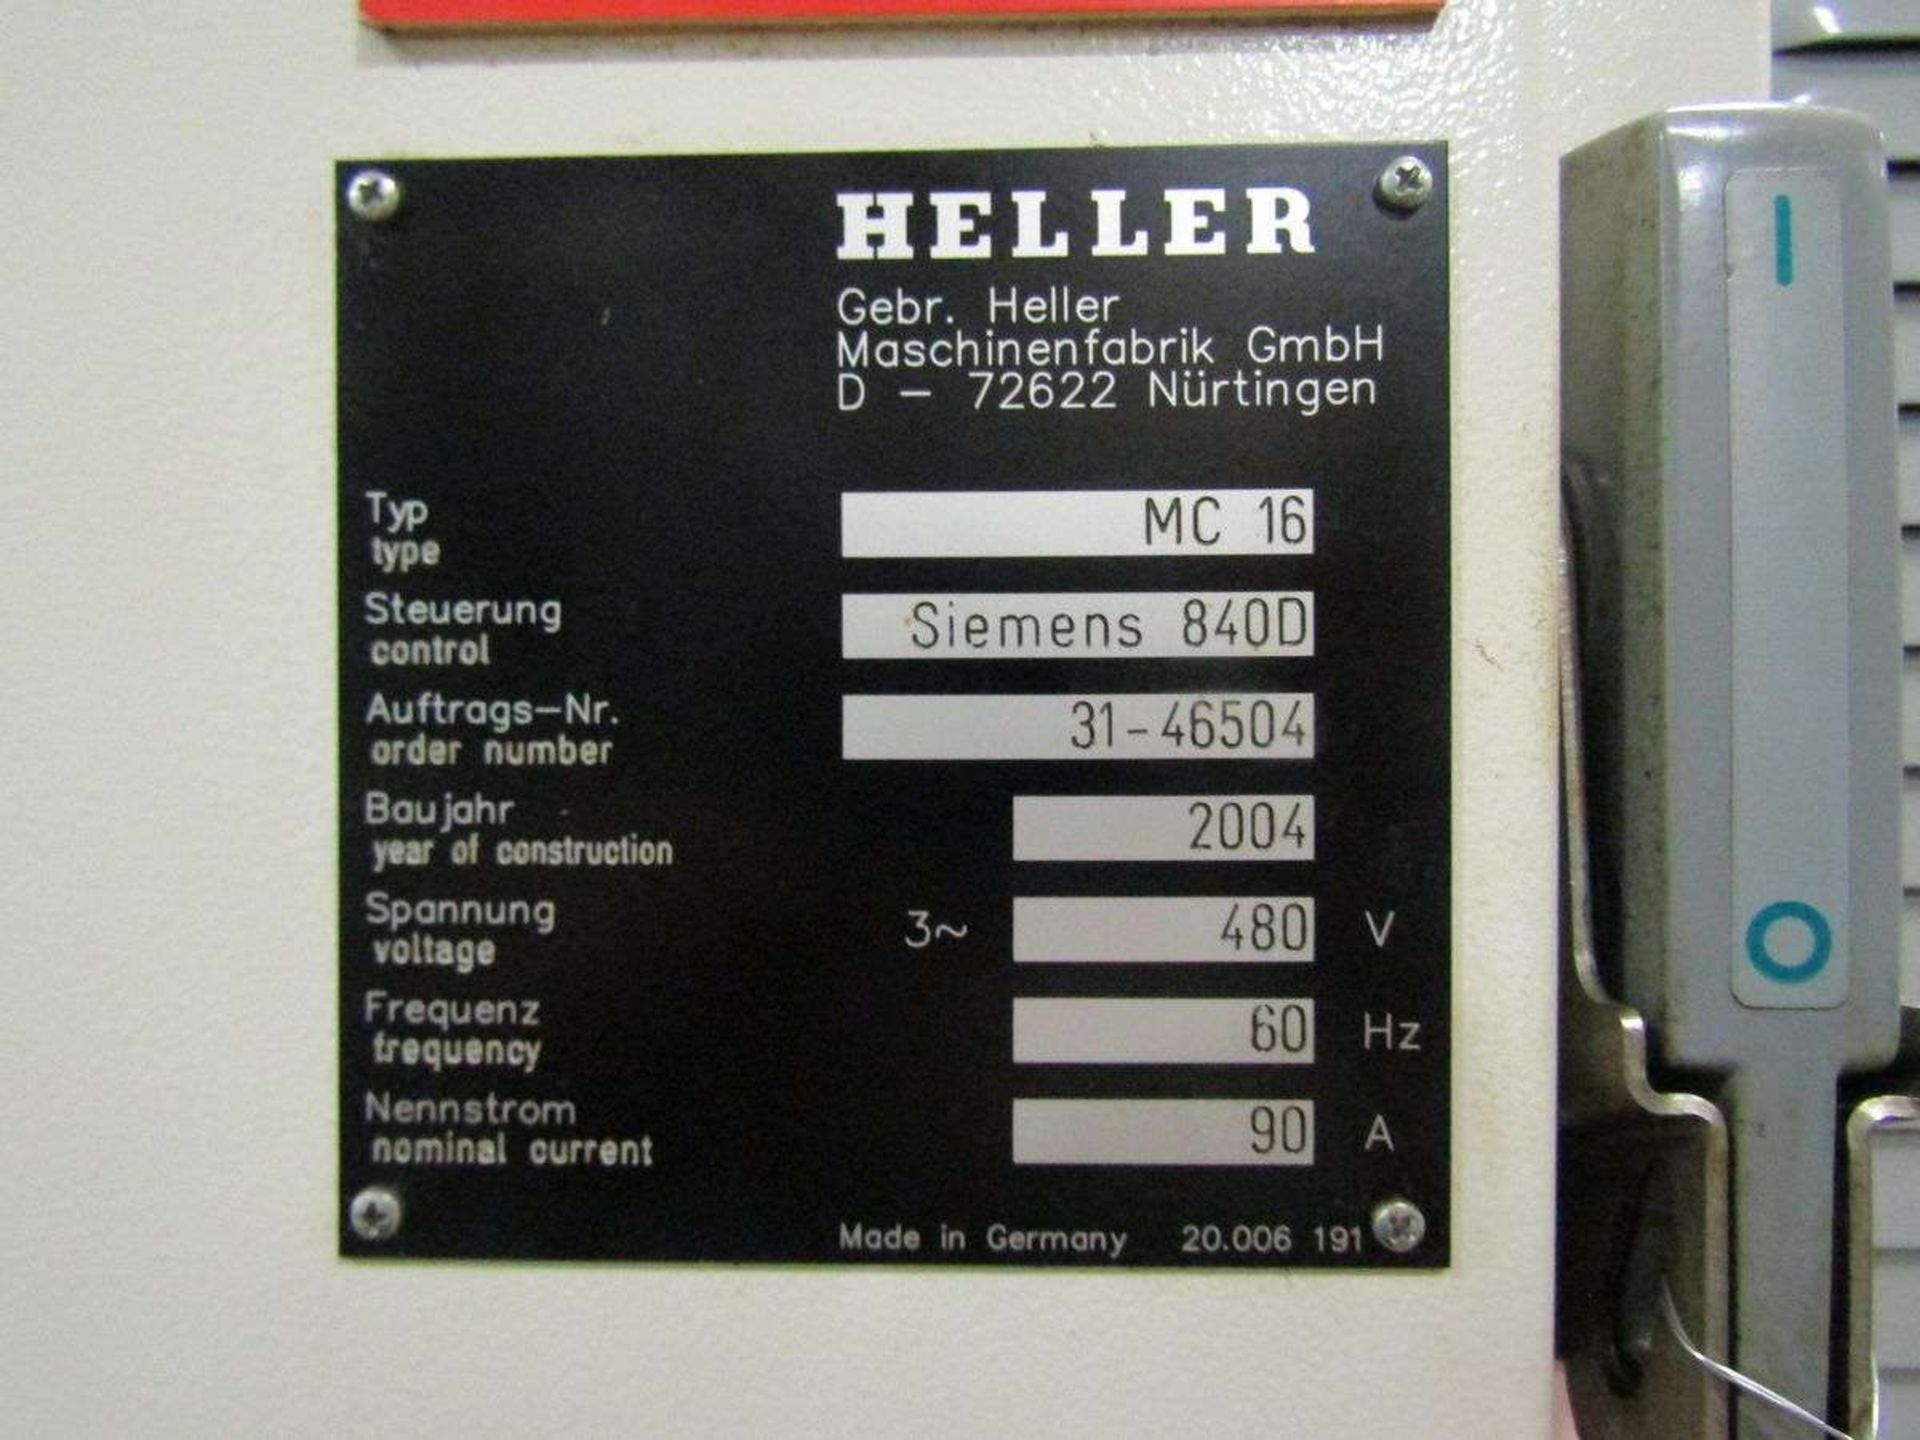 2004 Heller MC16 CNC Horizontal Machining Center - Image 6 of 7